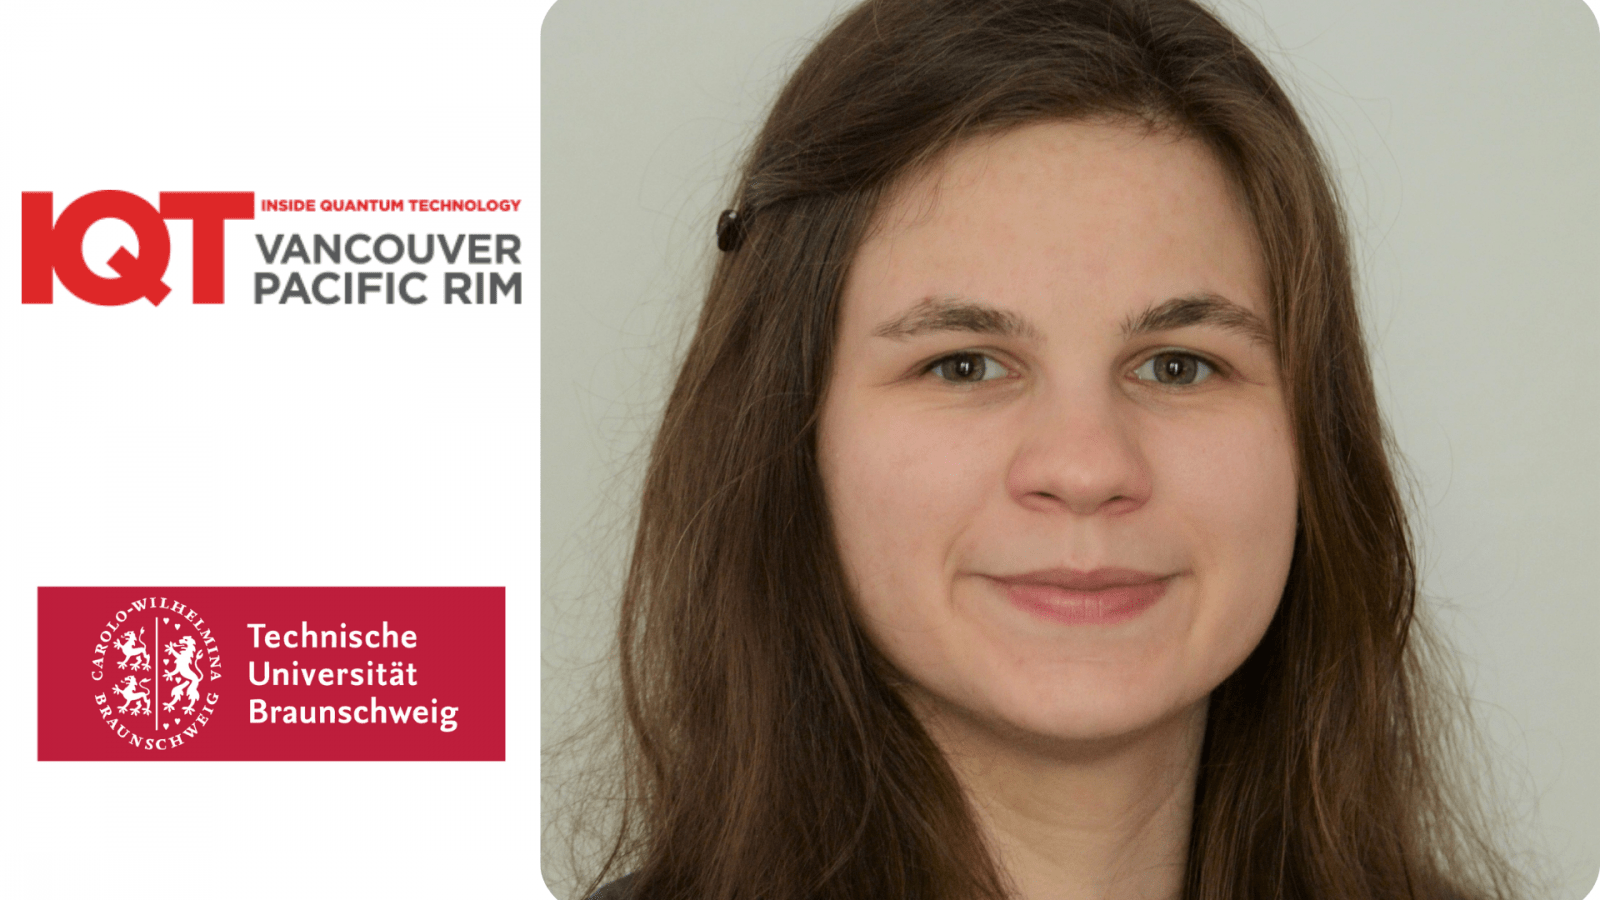 IQT Vancouver/Pacific Rim Update: Technical University Braunschweig Research Assistant Franziska Greinert is a 2024 Speaker